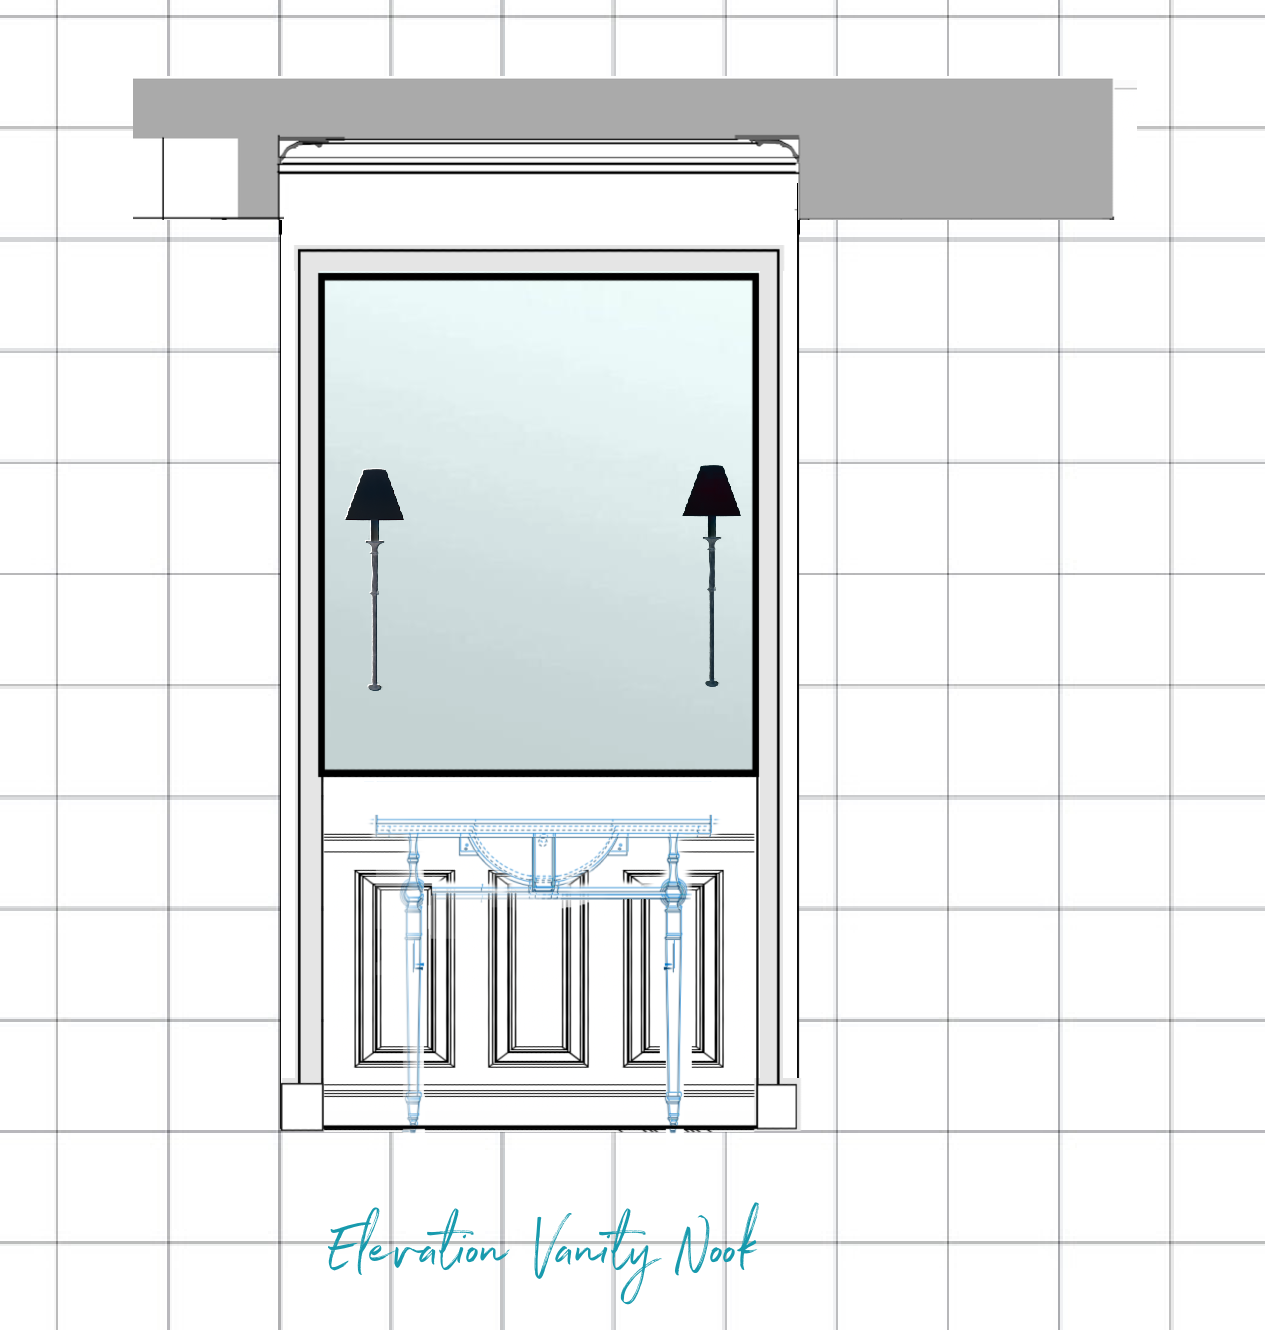 elevation vanity wall #1the primary bathroom design